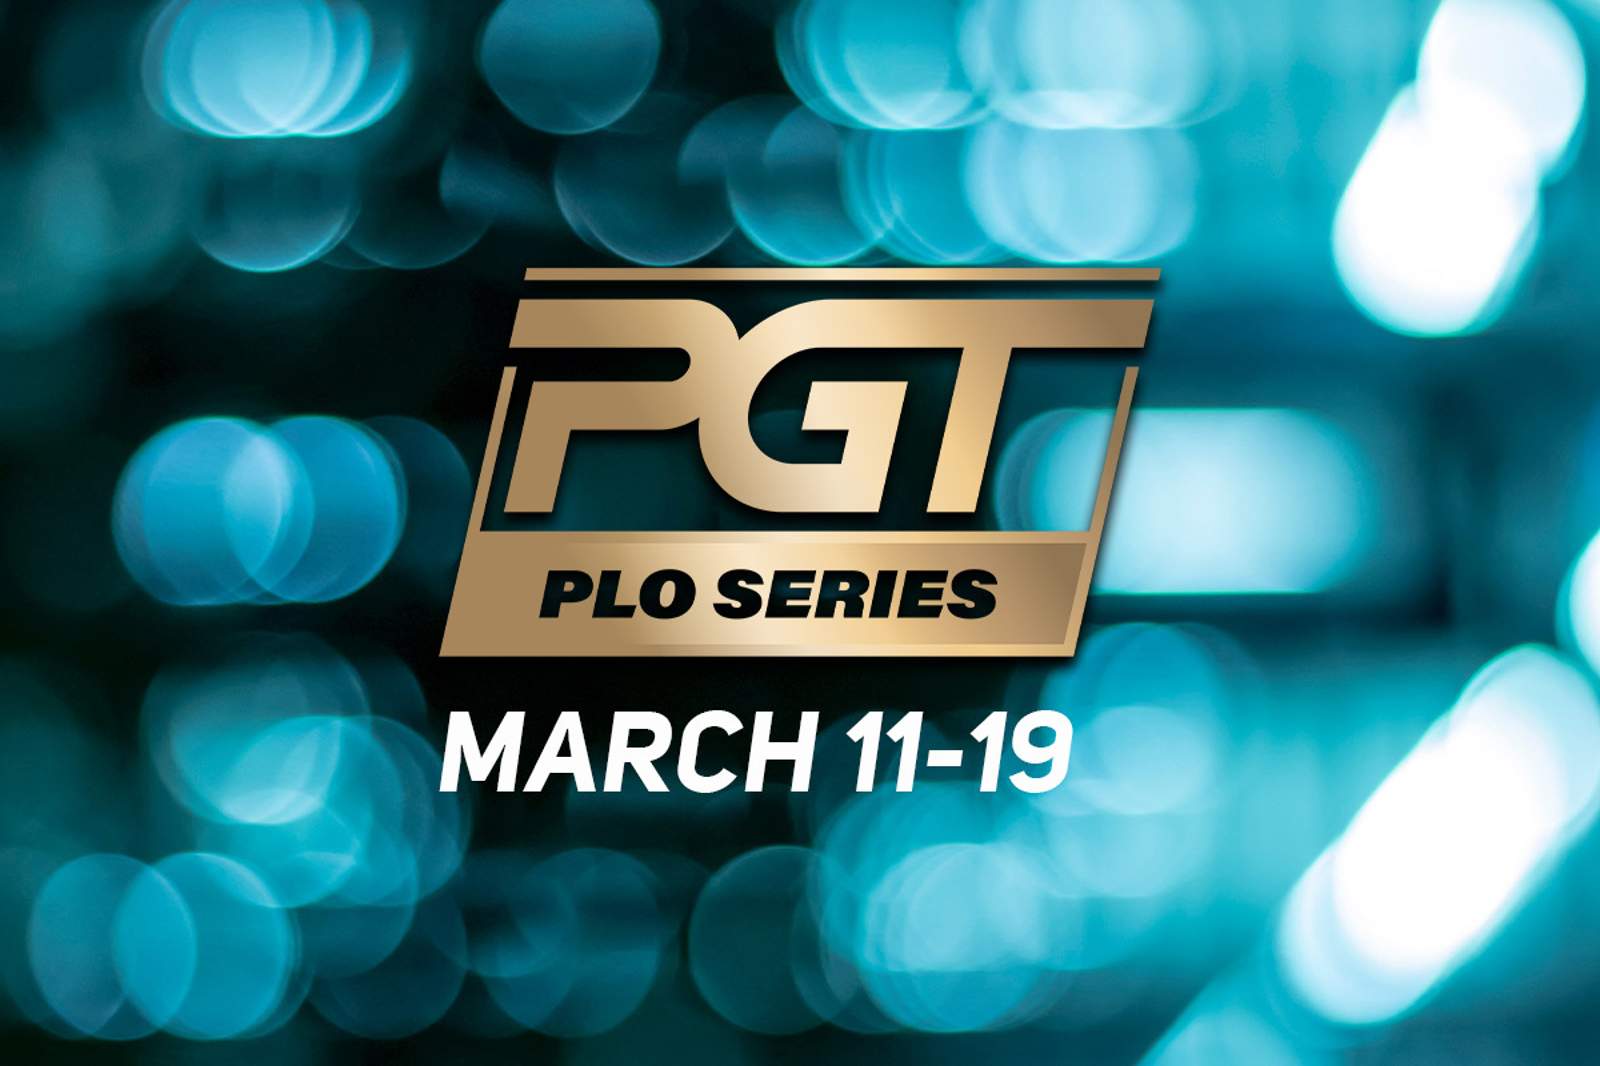 PGT PLO Series Schedule: March 11-19